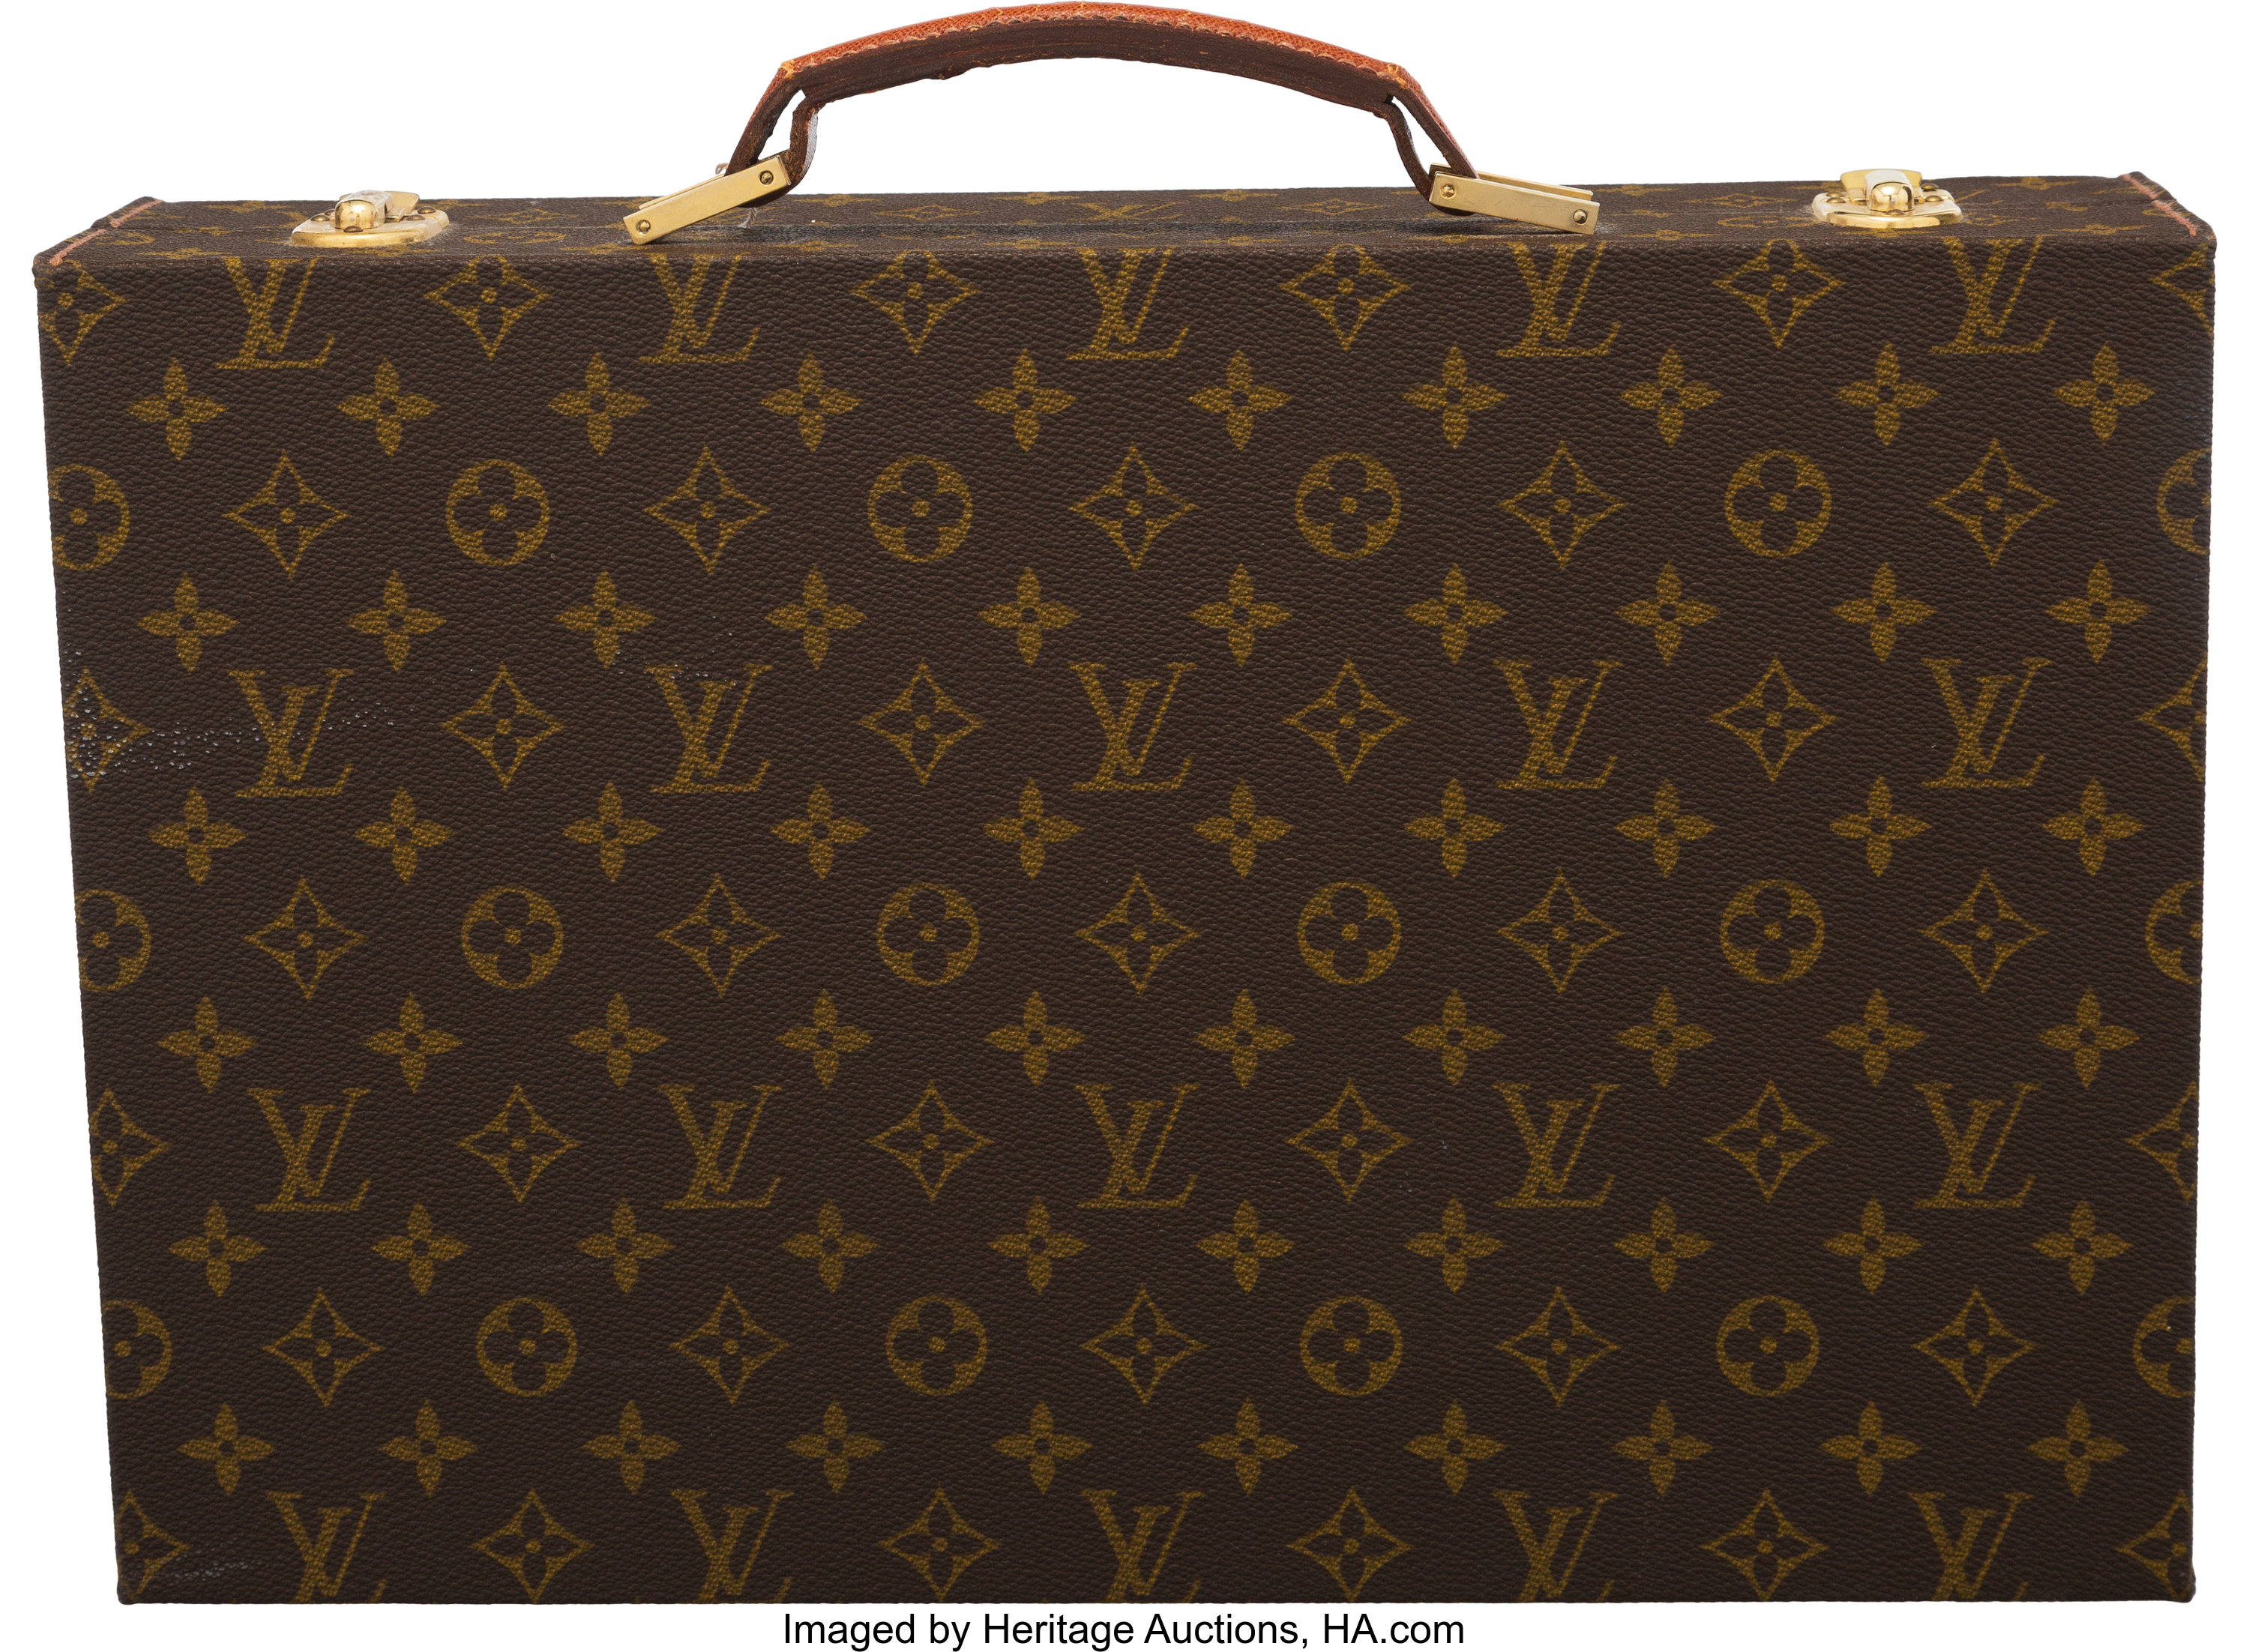 LOUIS VUITTON Game On Monogram Canvas Luggage Tag Bag Charm Brown - Fi